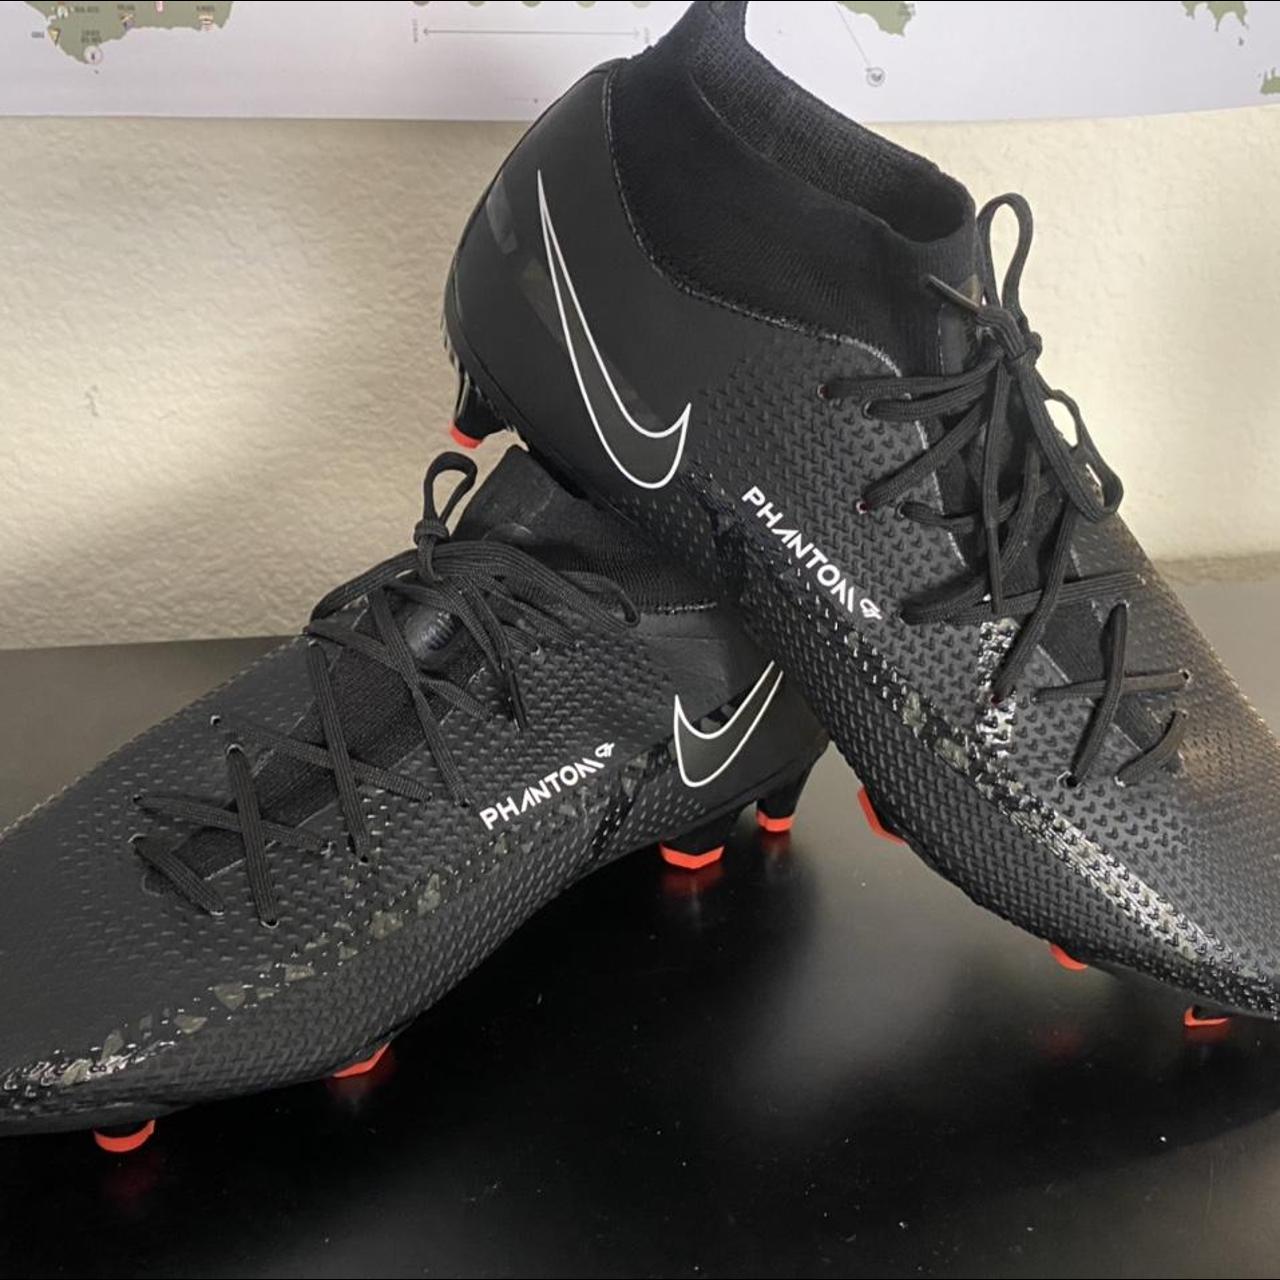 Product Image 1 - Nike Phantom Soccer Cleats/Football Boots

worn